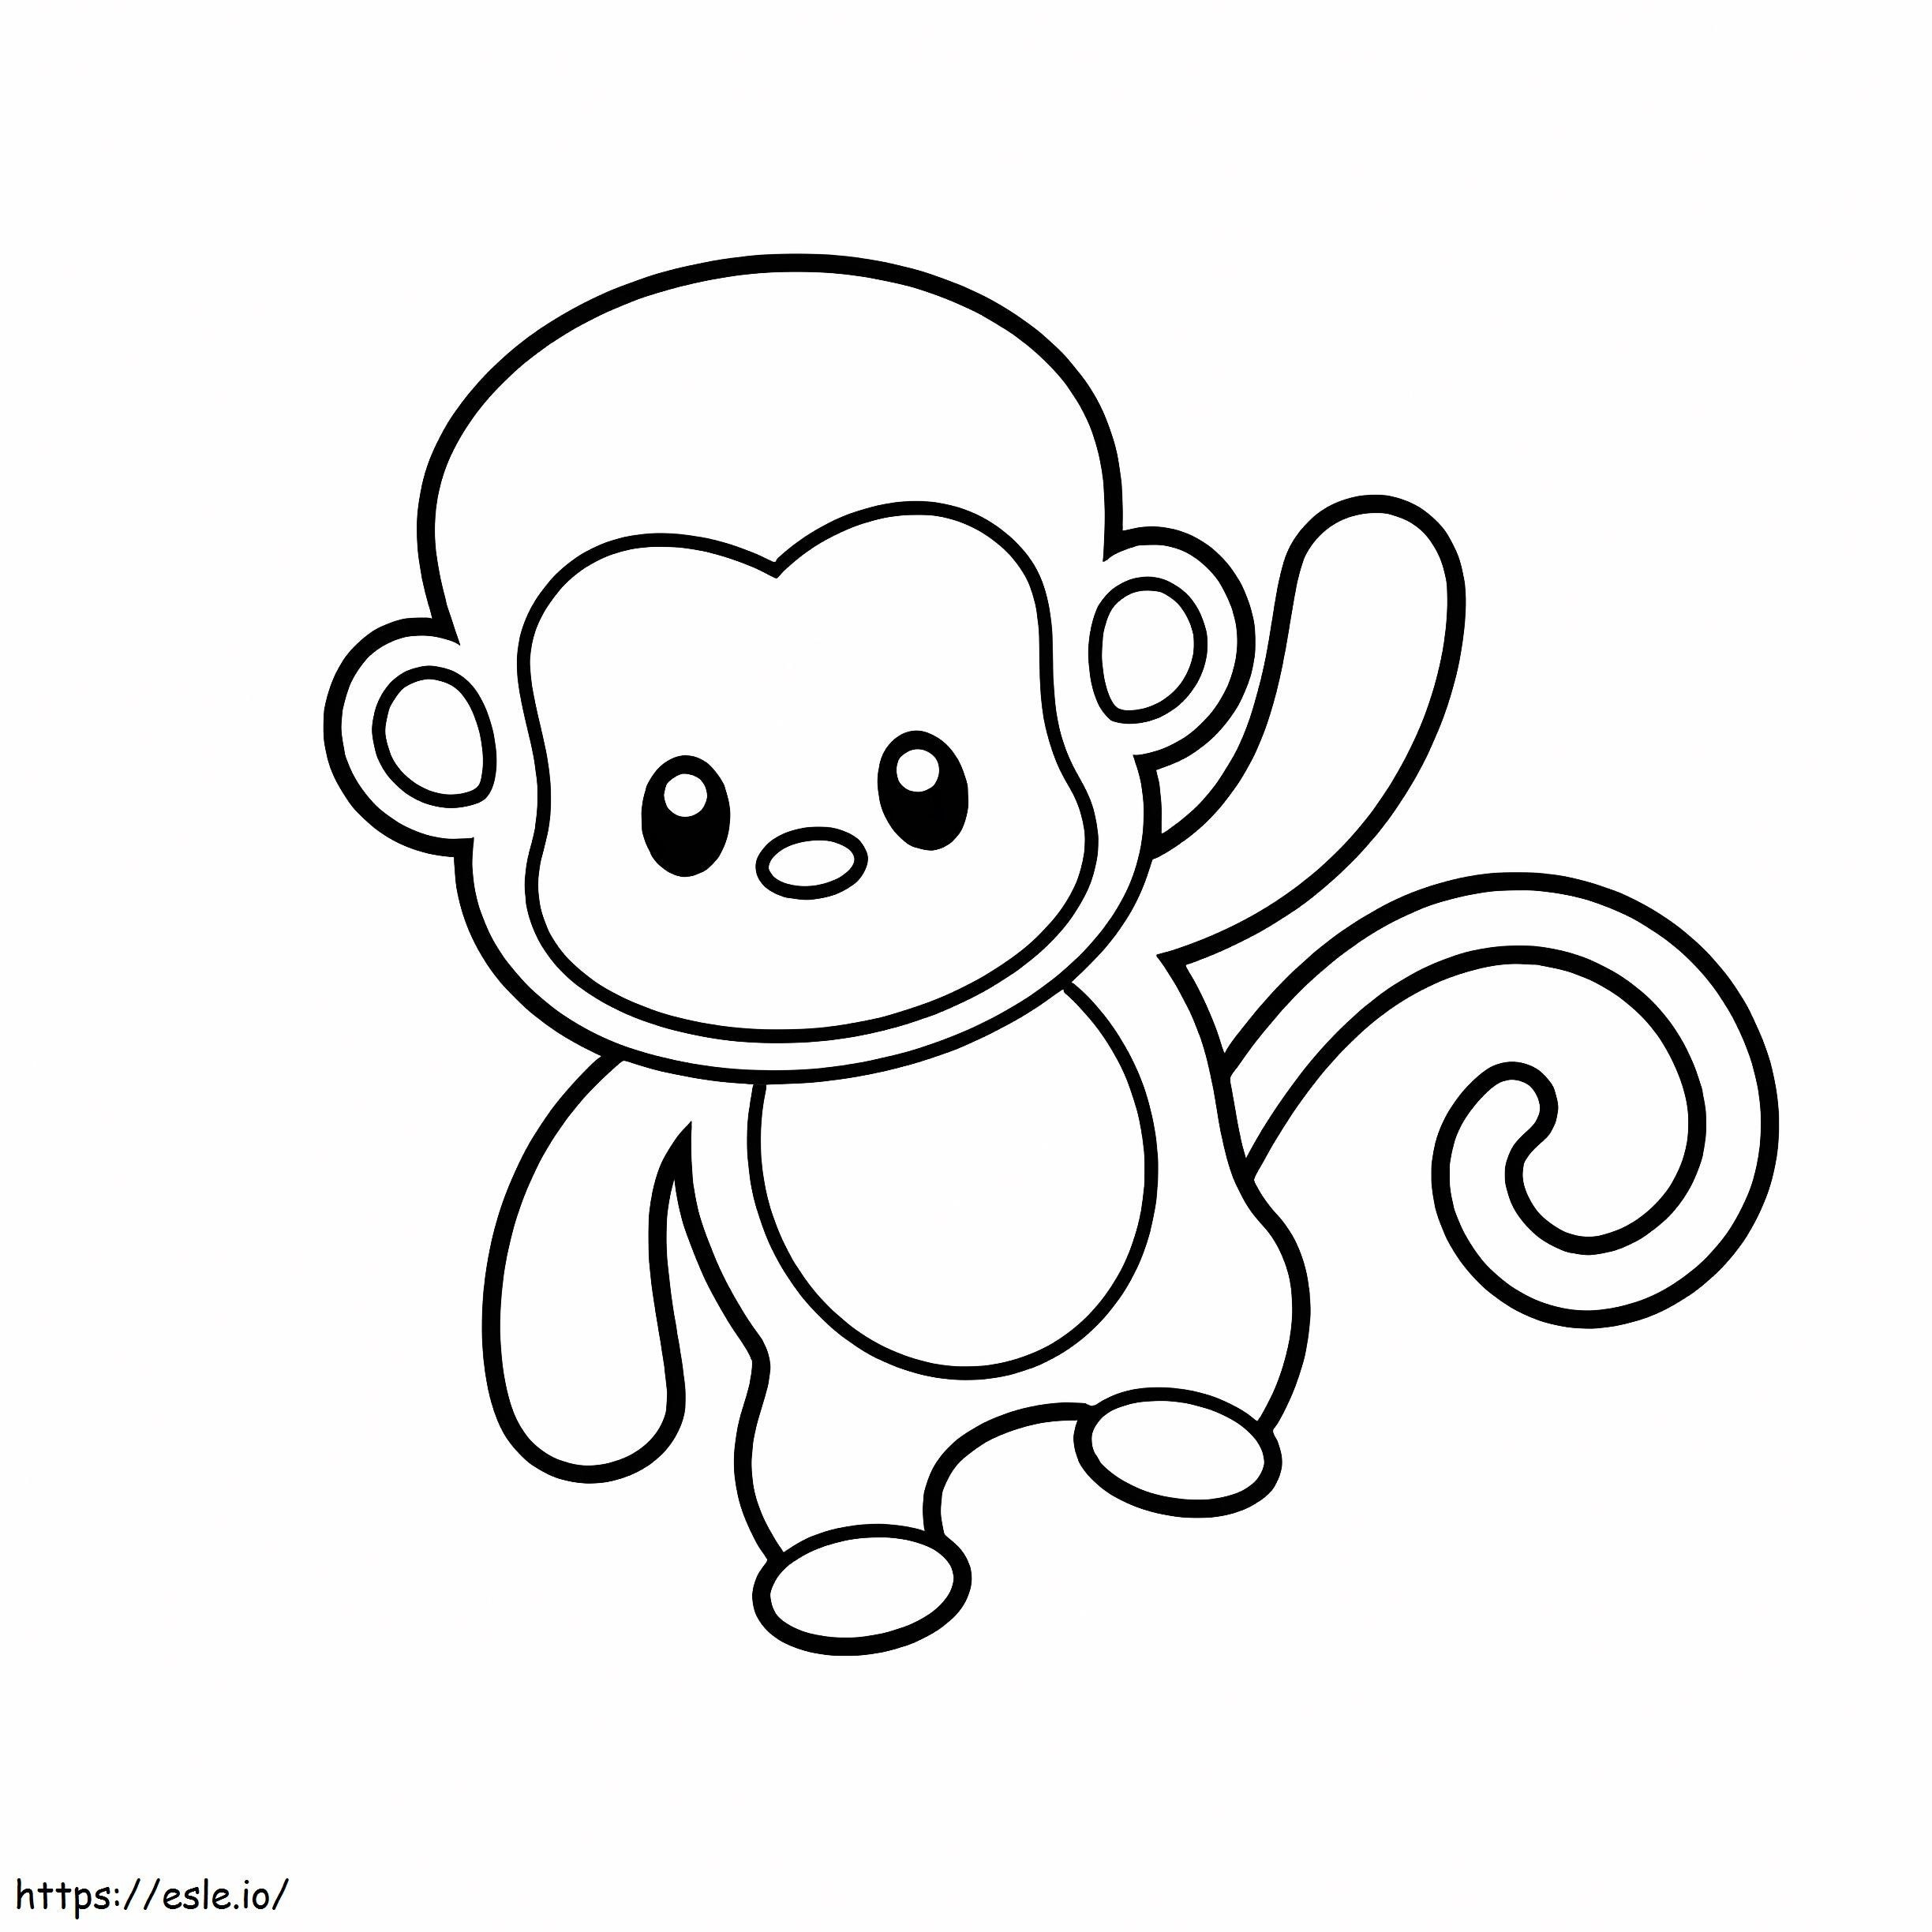 Słodka małpa kolorowanka